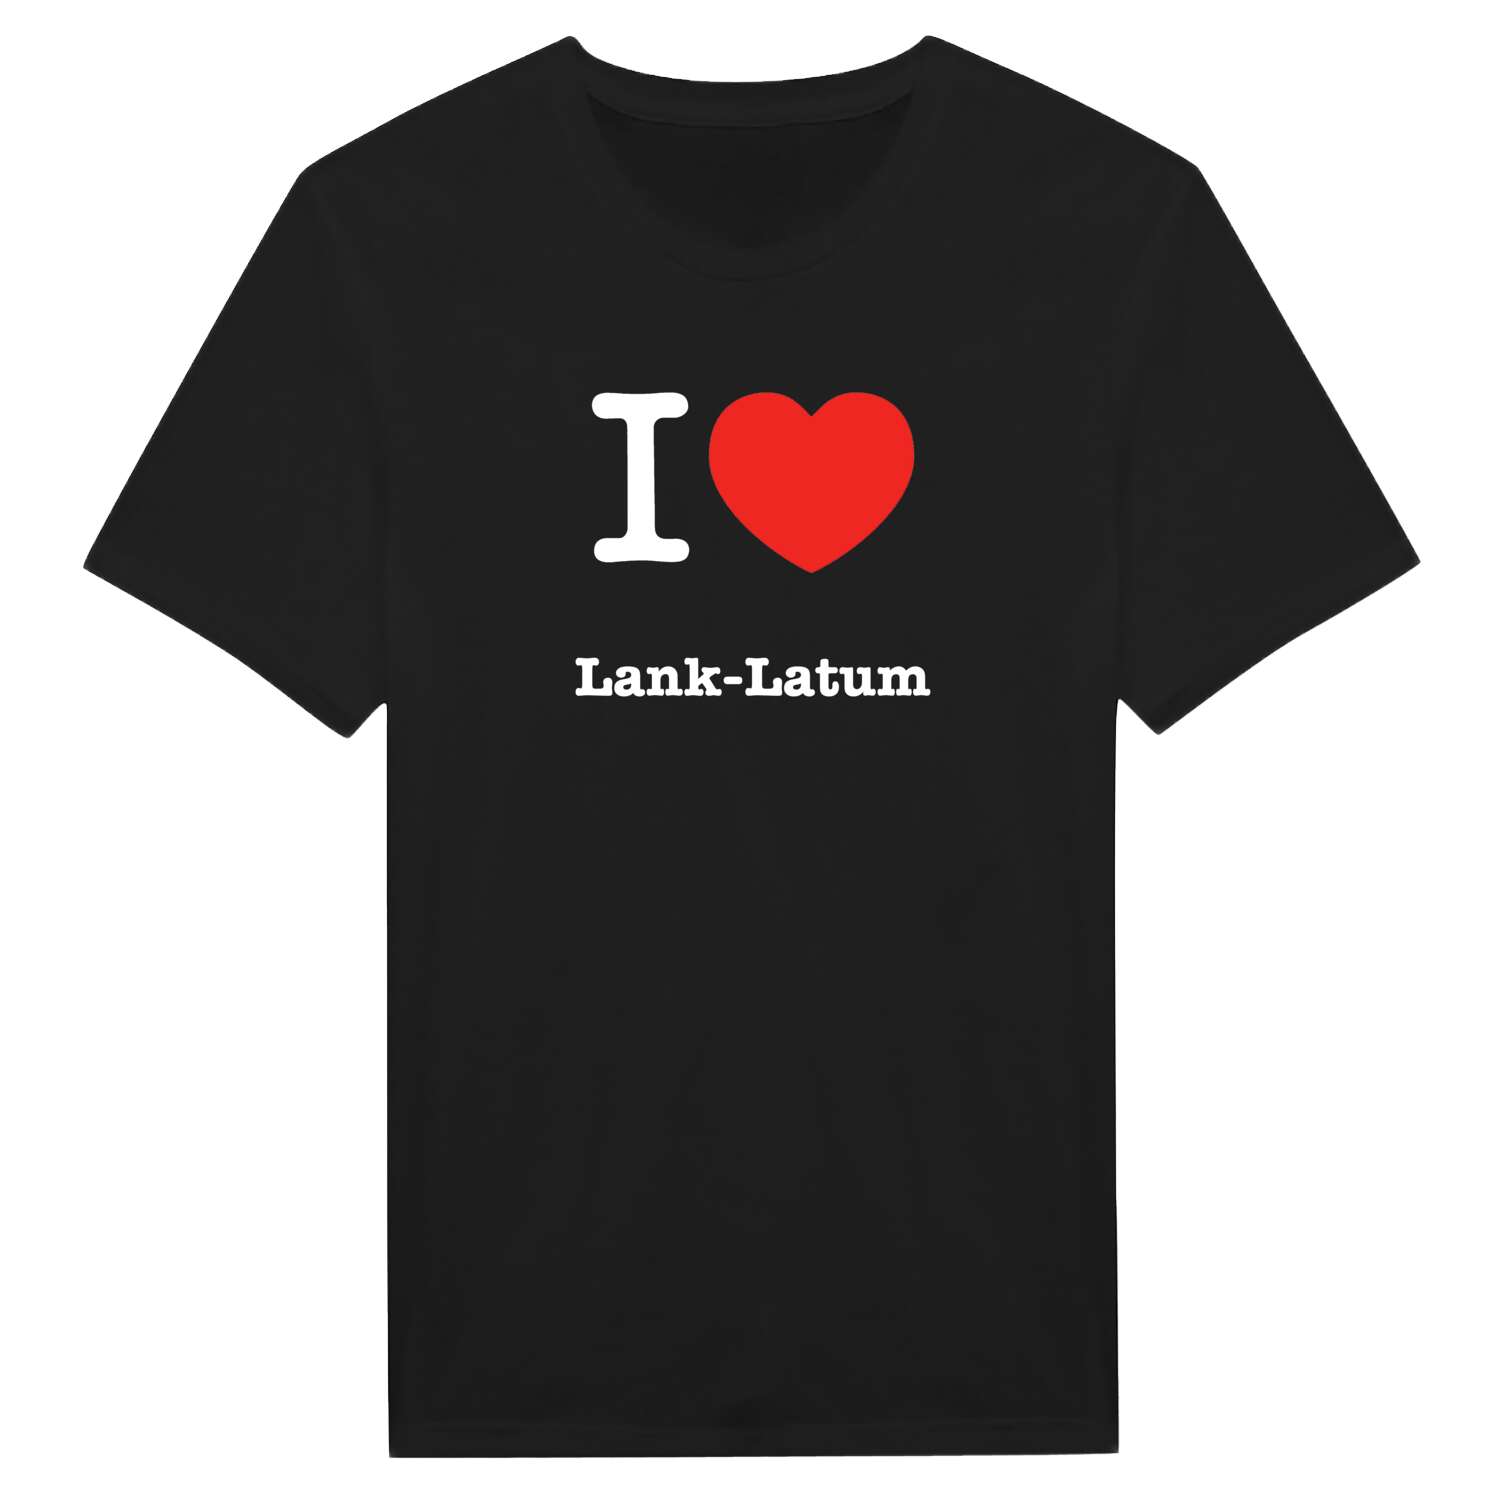 Lank-Latum T-Shirt »I love«